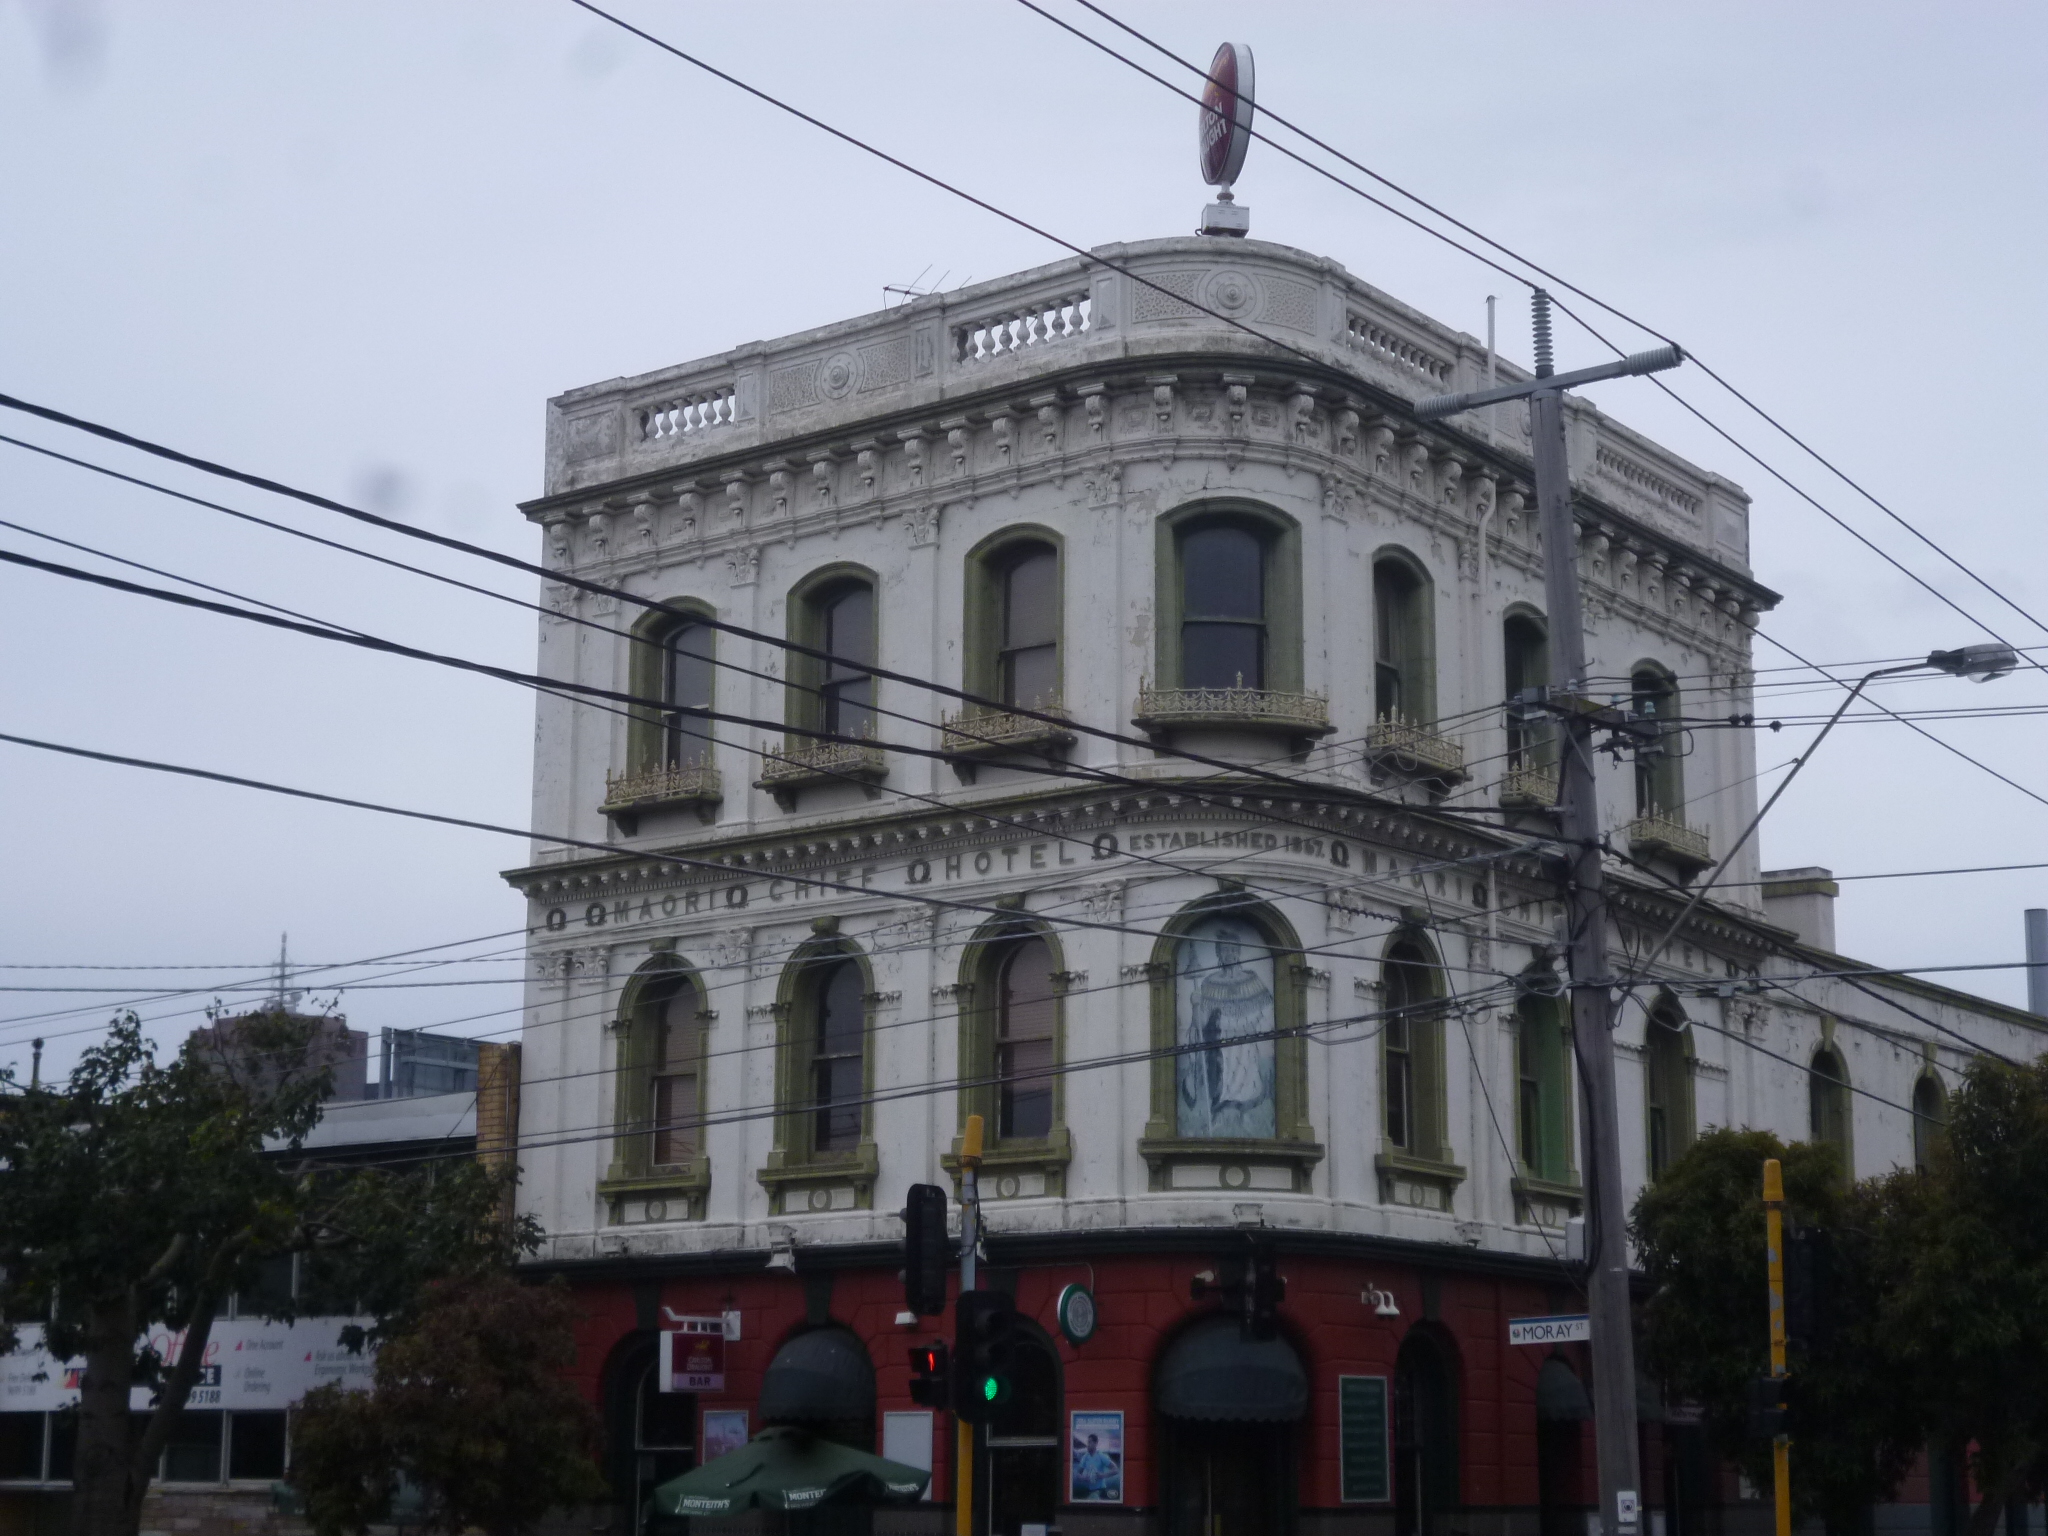 Maori Chief Hotel - Accommodation Adelaide